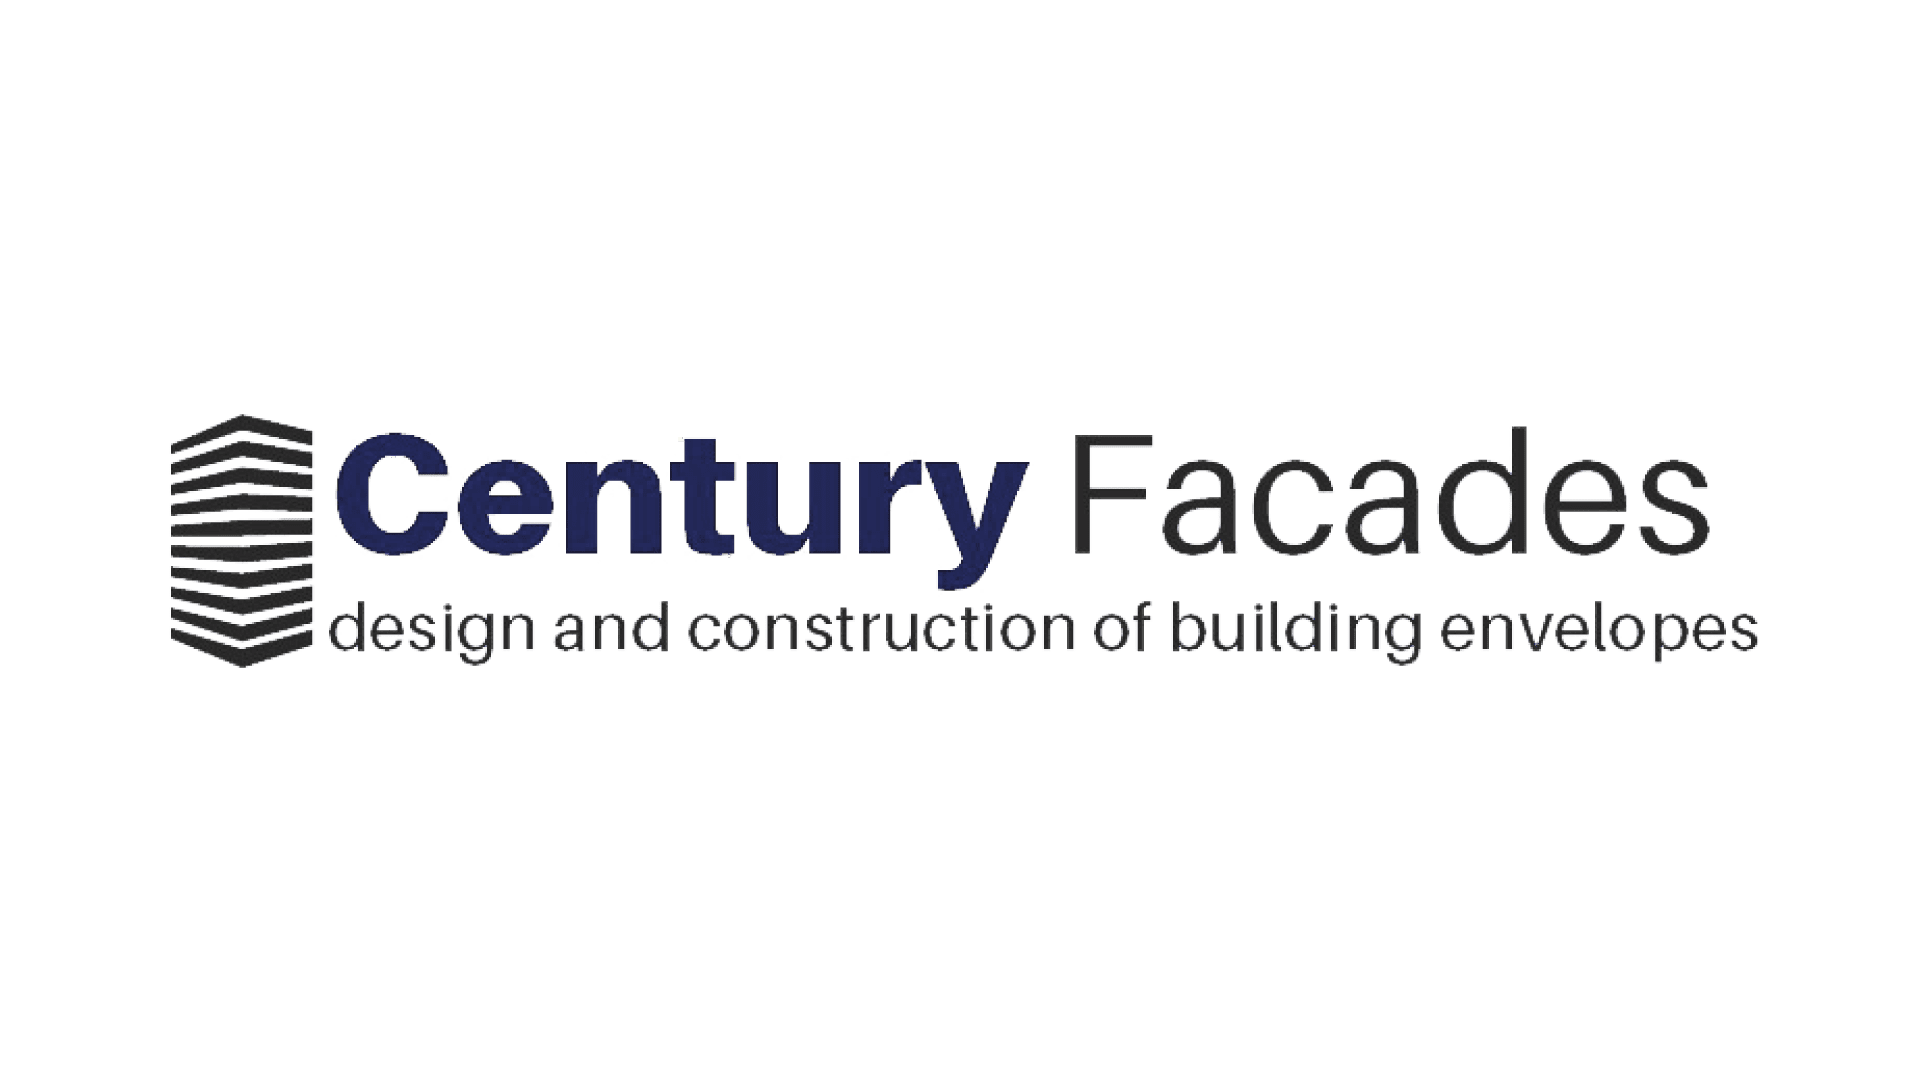 CADS client Century Facades